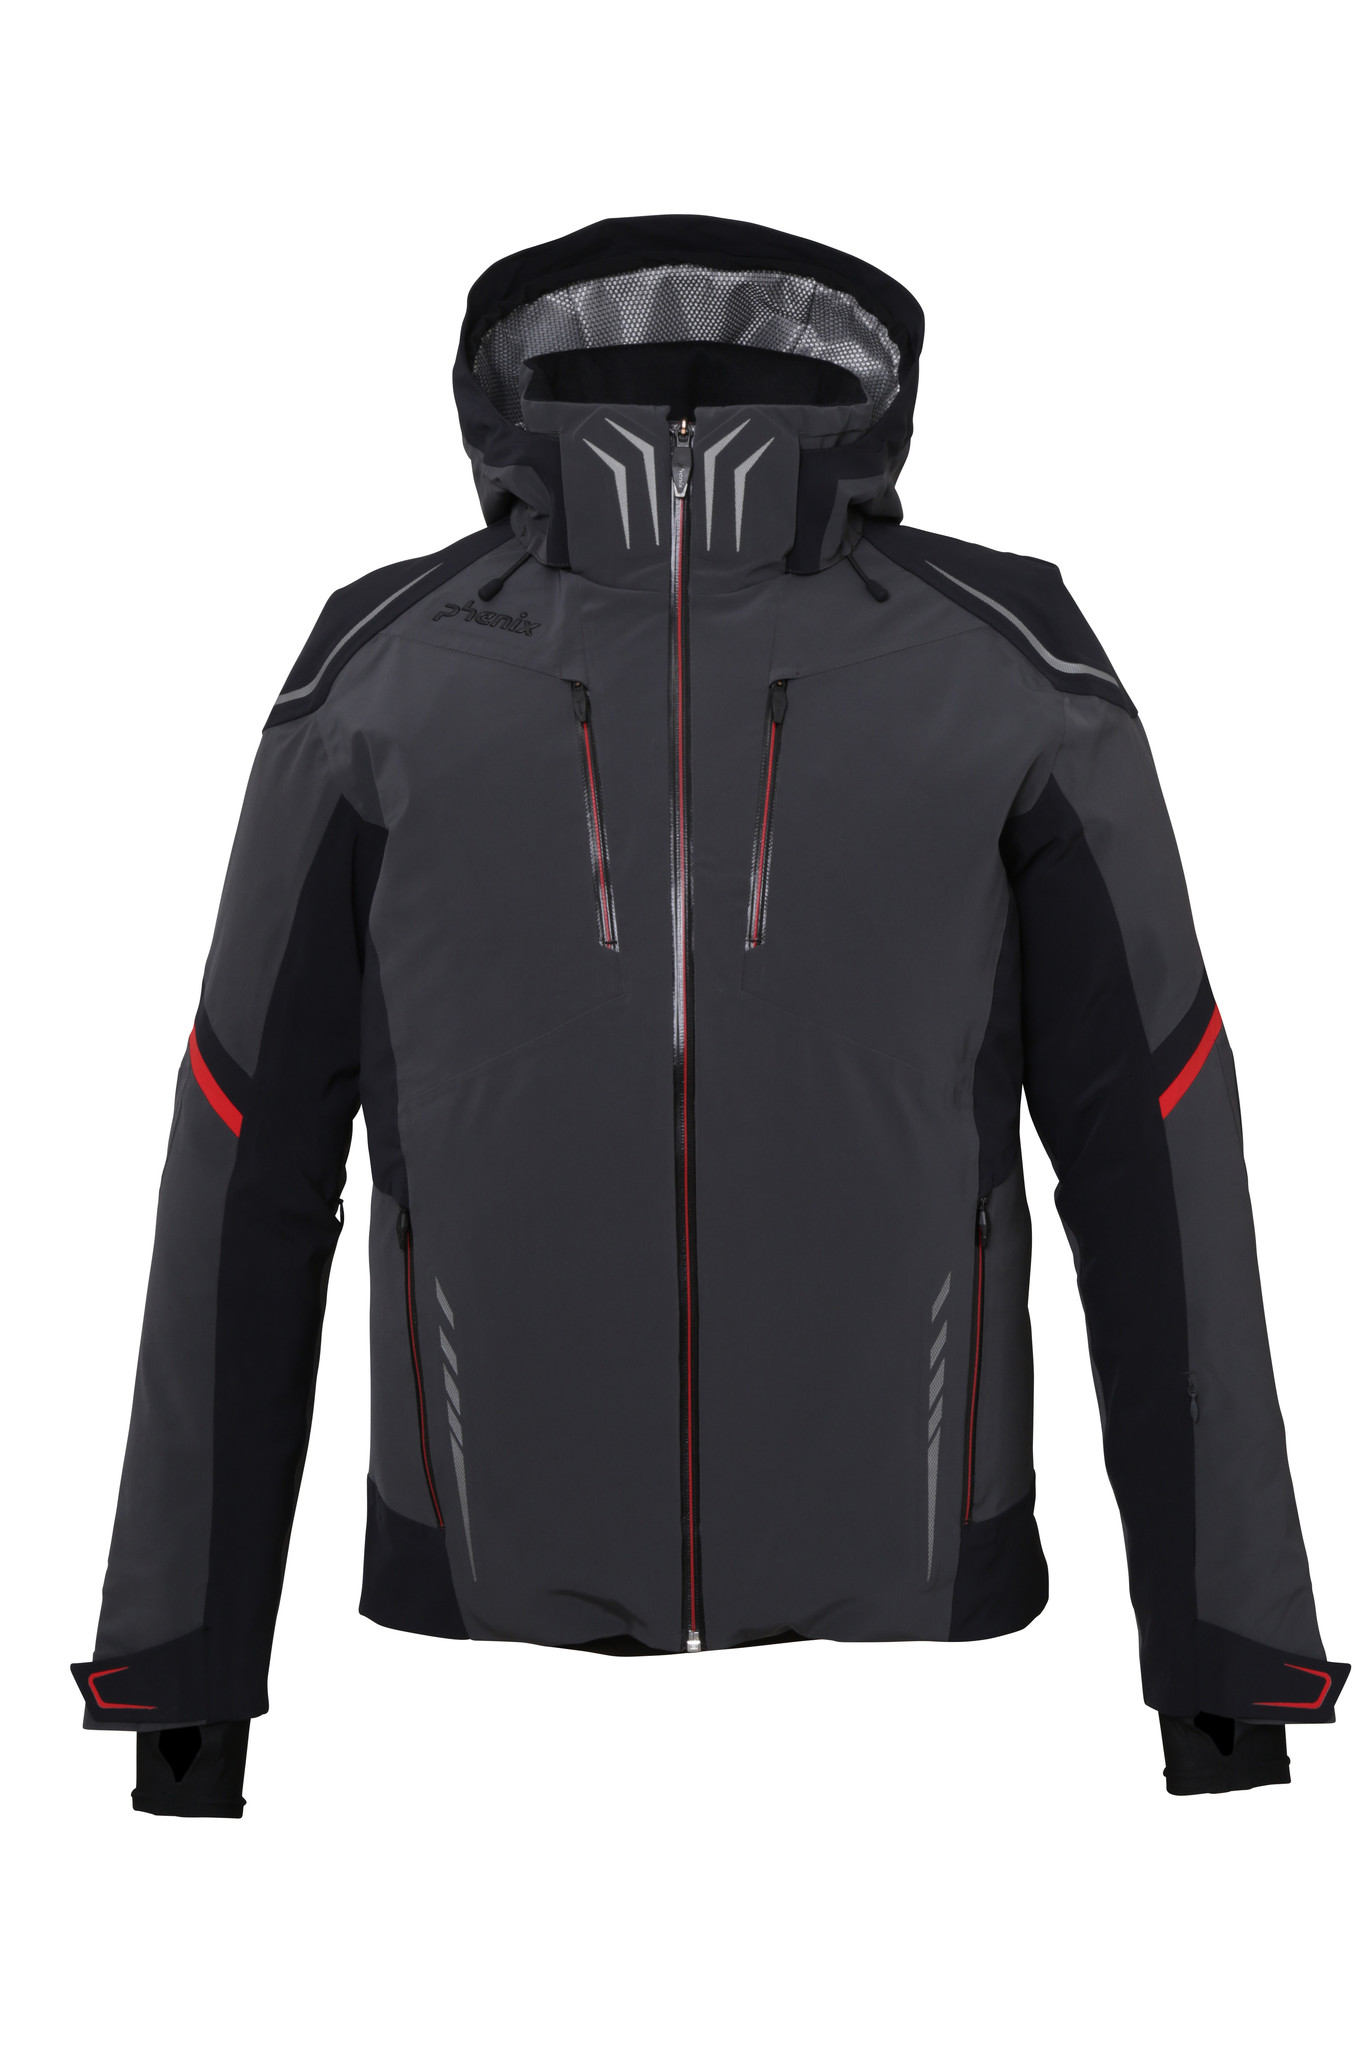 PHENIX Monza Jacket - Sportshop-Online